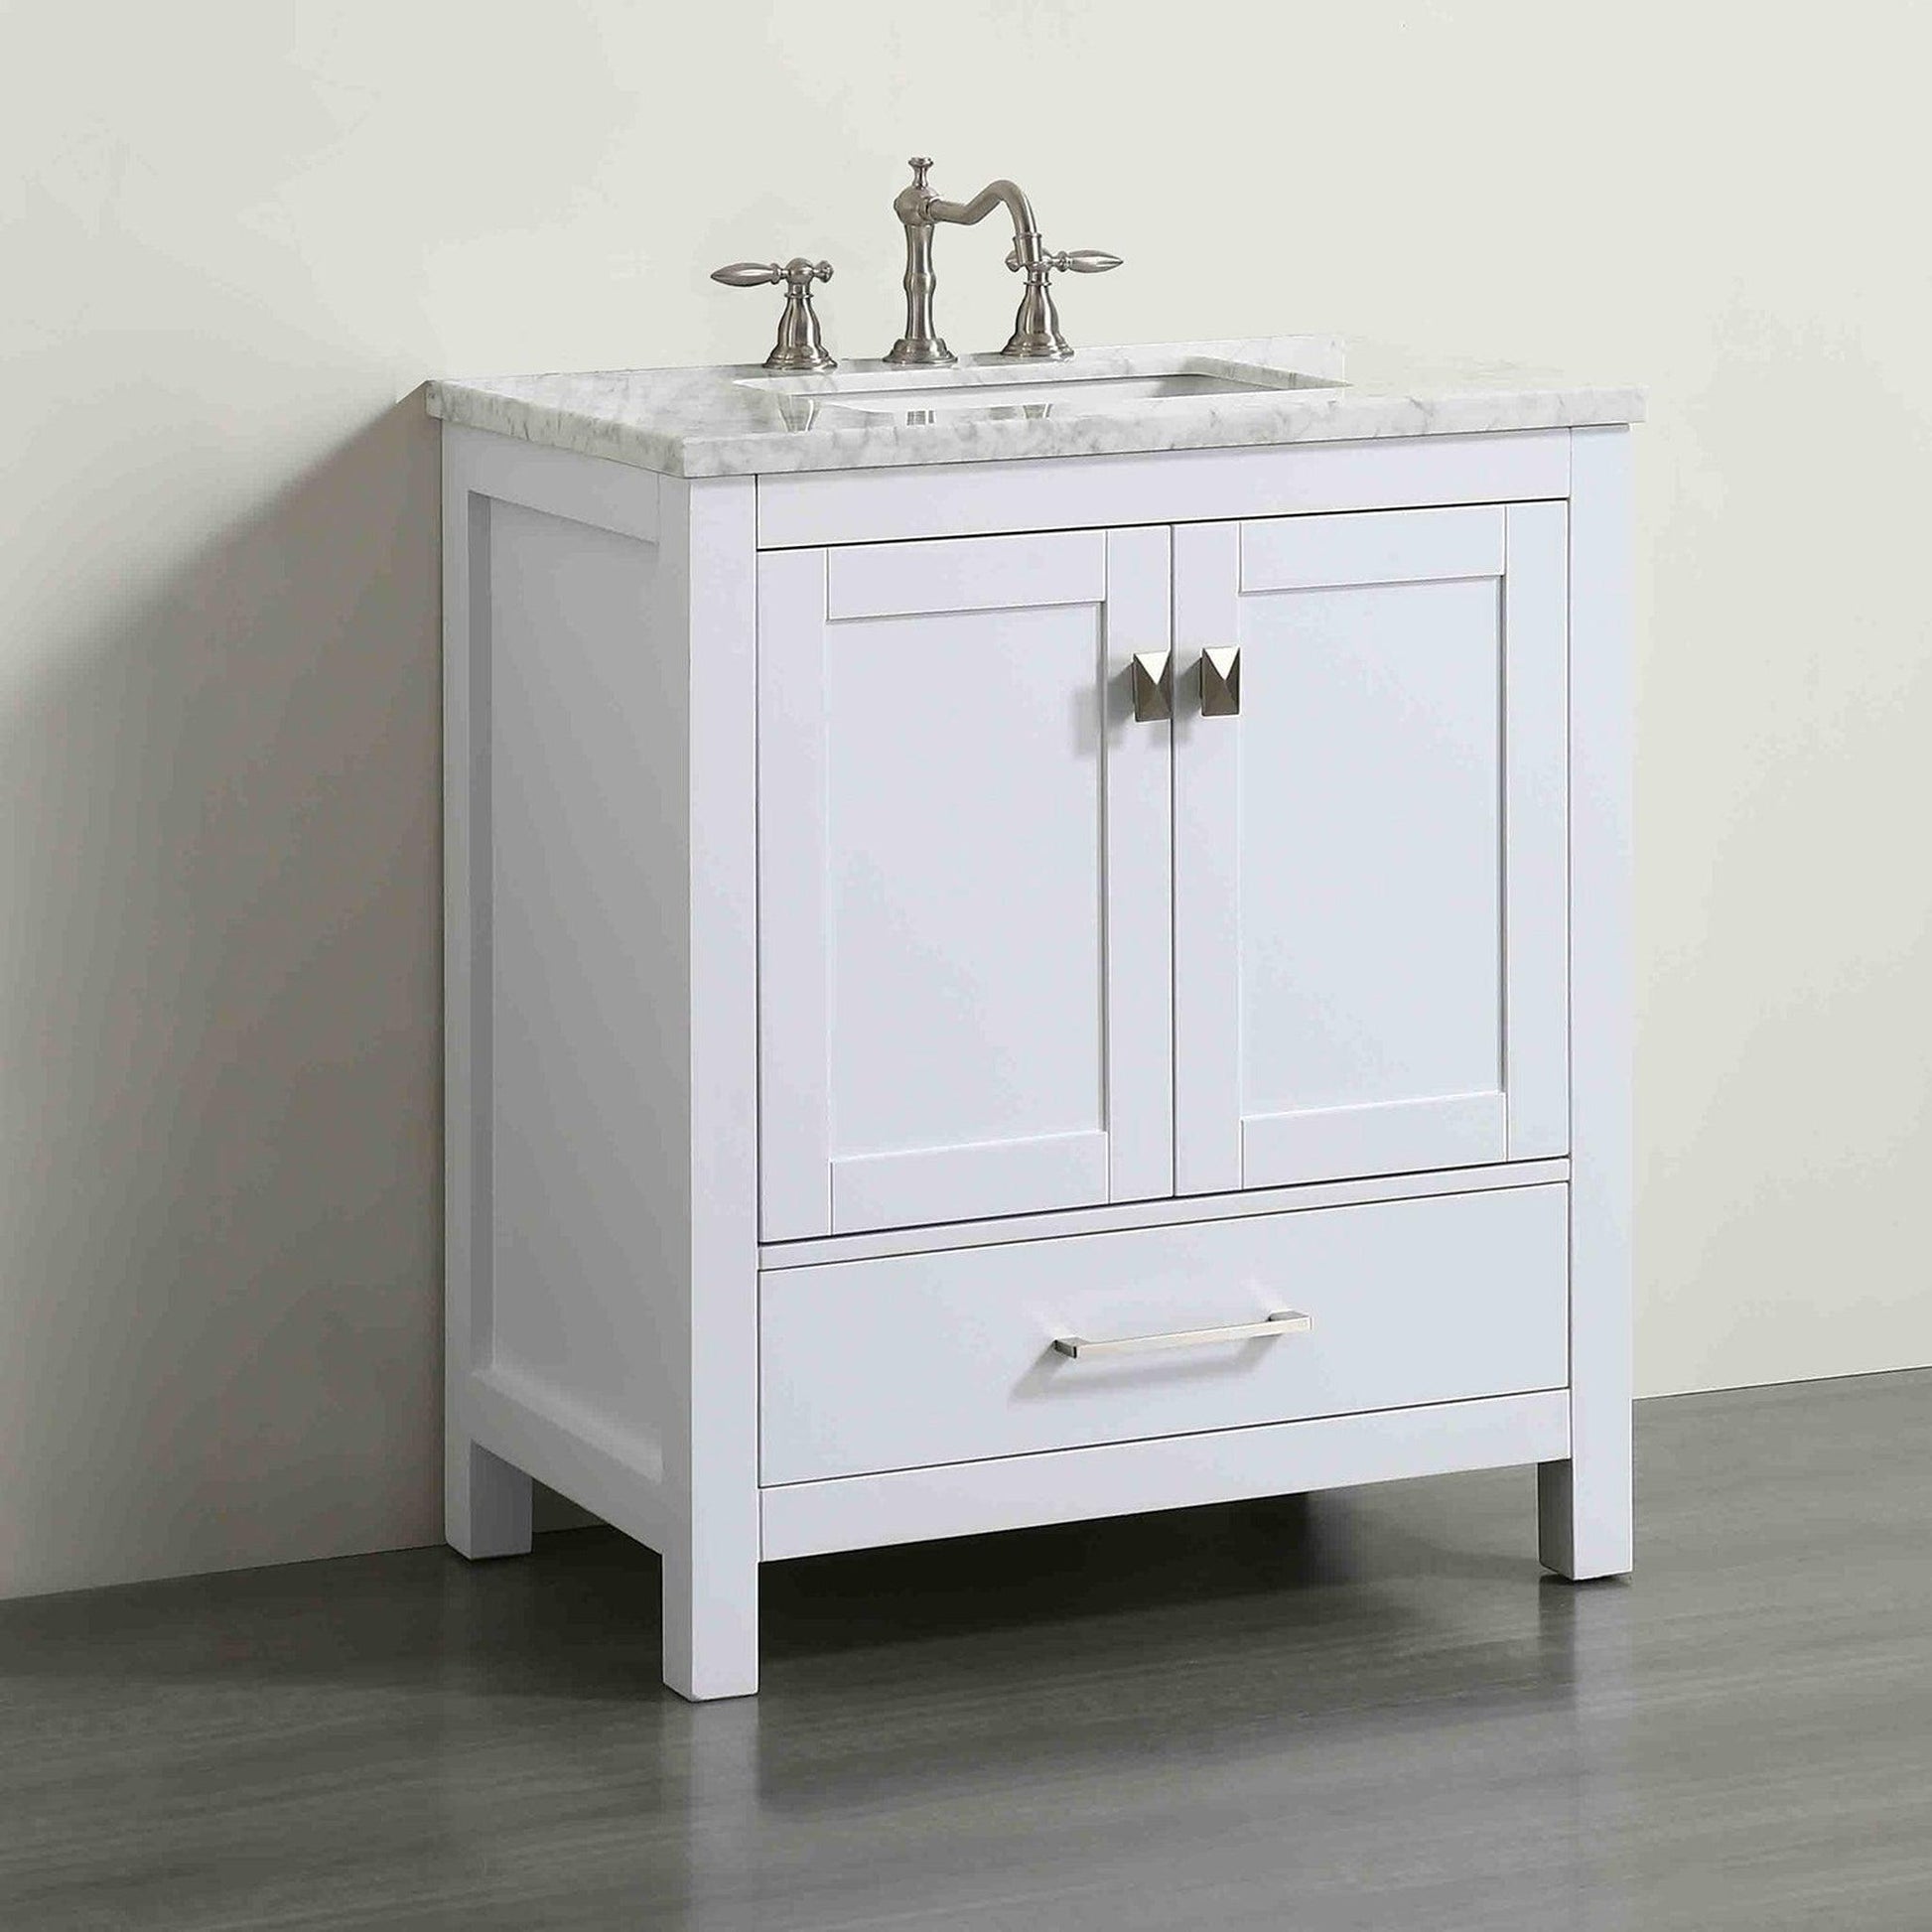 Eviva Aberdeen 30" x 34" White Freestanding Bathroom Vanity With Single Undermount Sink